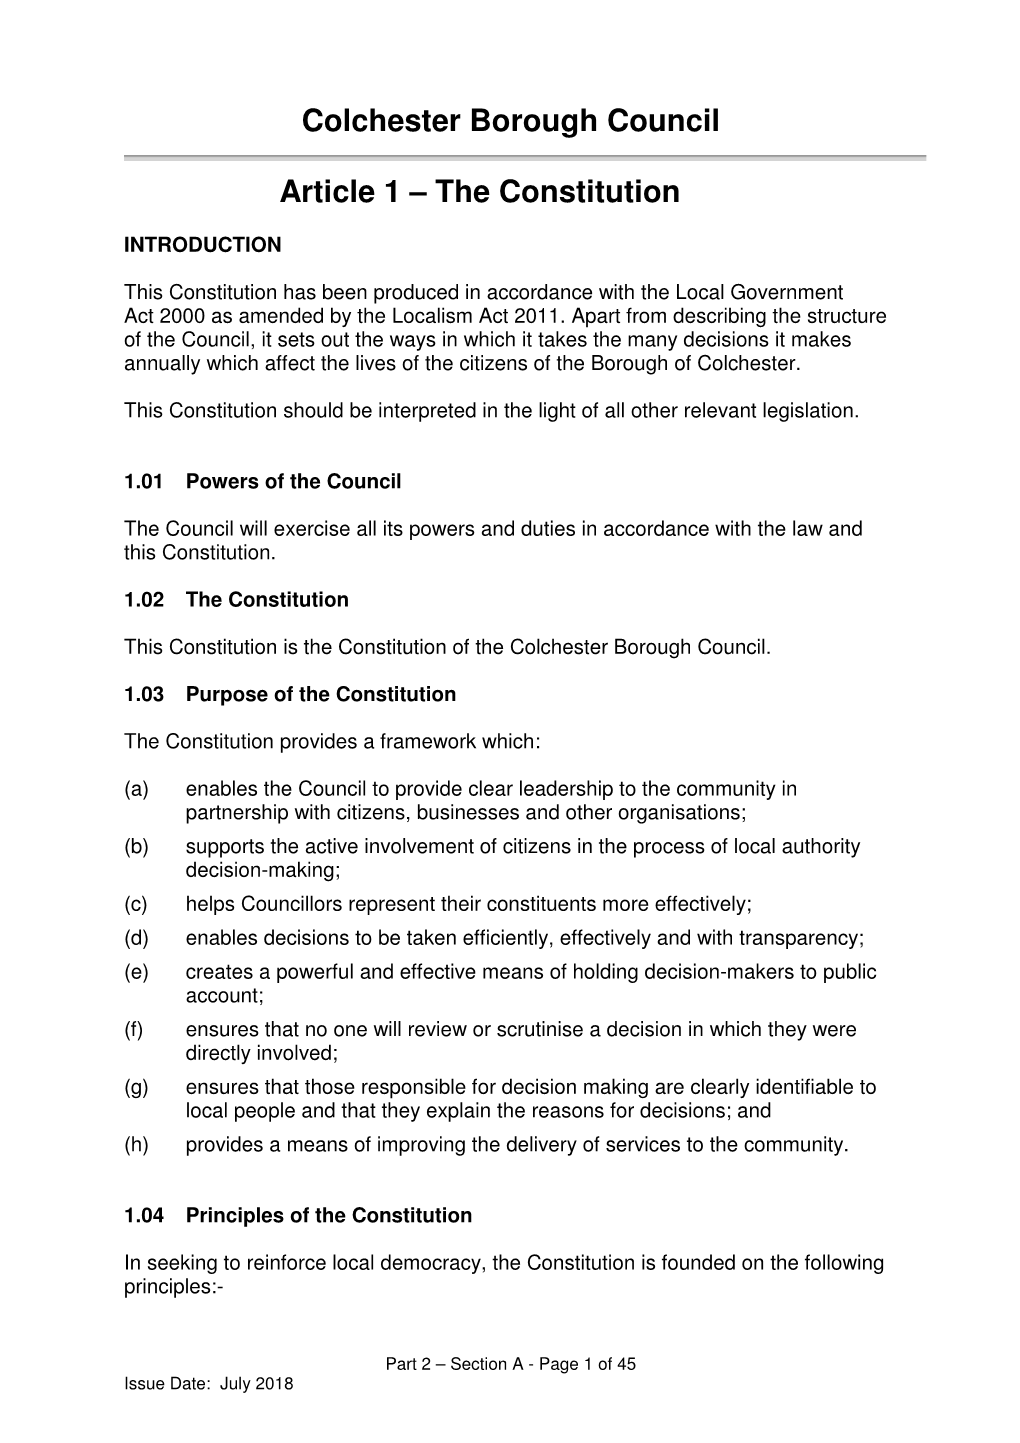 Colchester Borough Council Article 1 – the Constitution